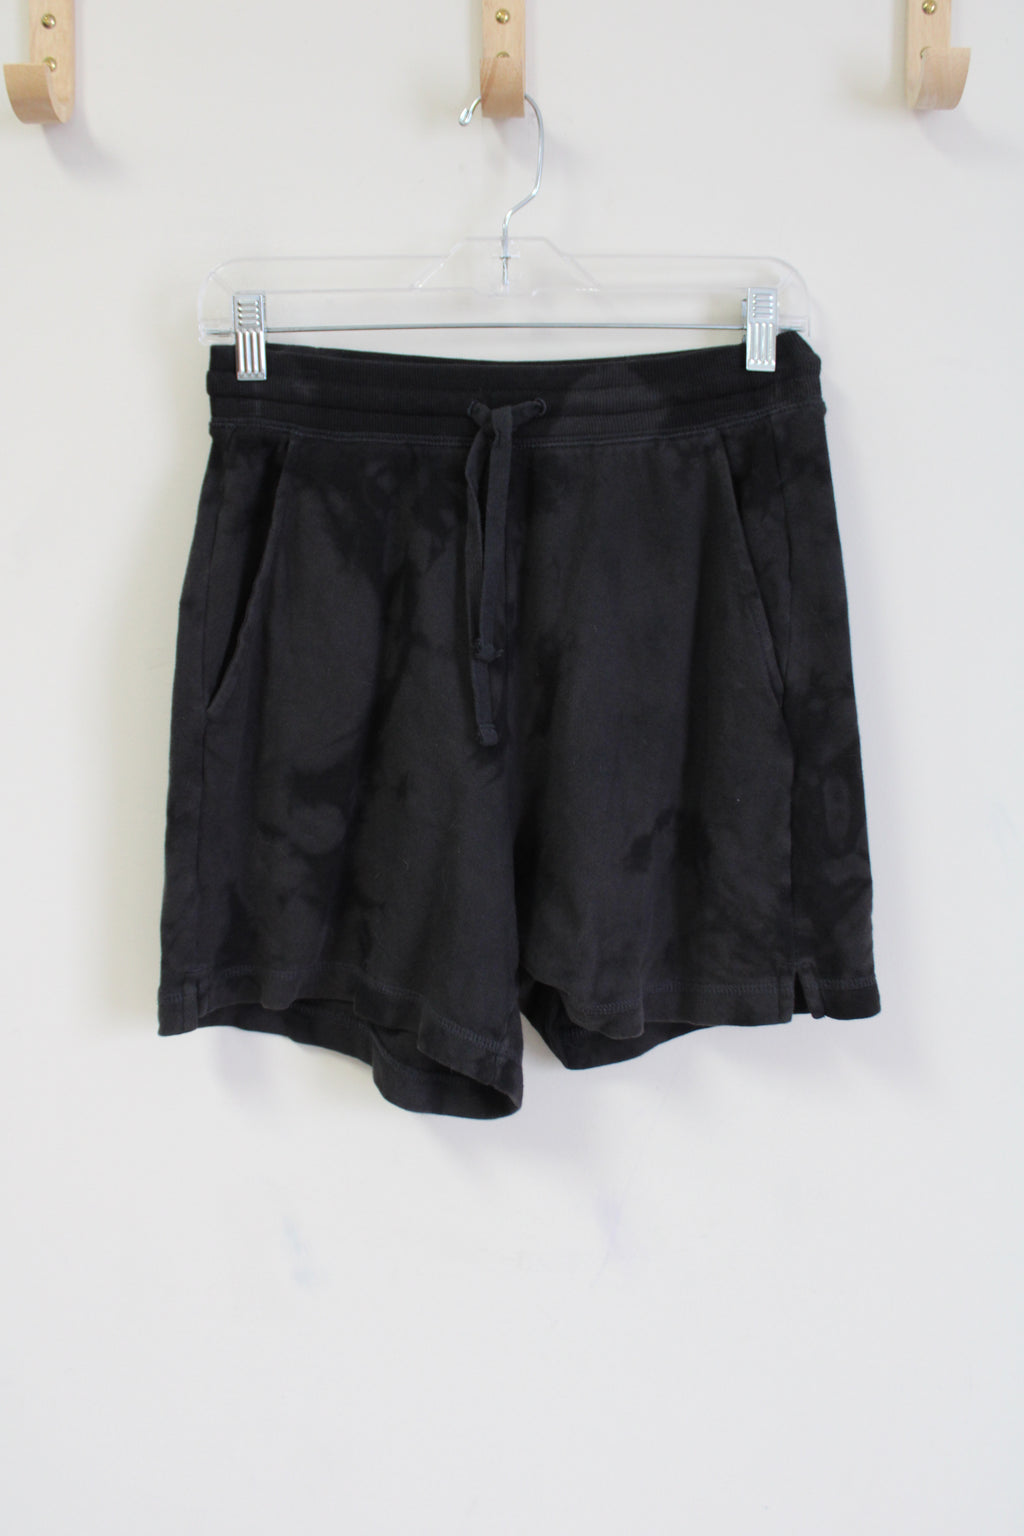 Old Navy Black & Gray Tie Dye Shorts | S